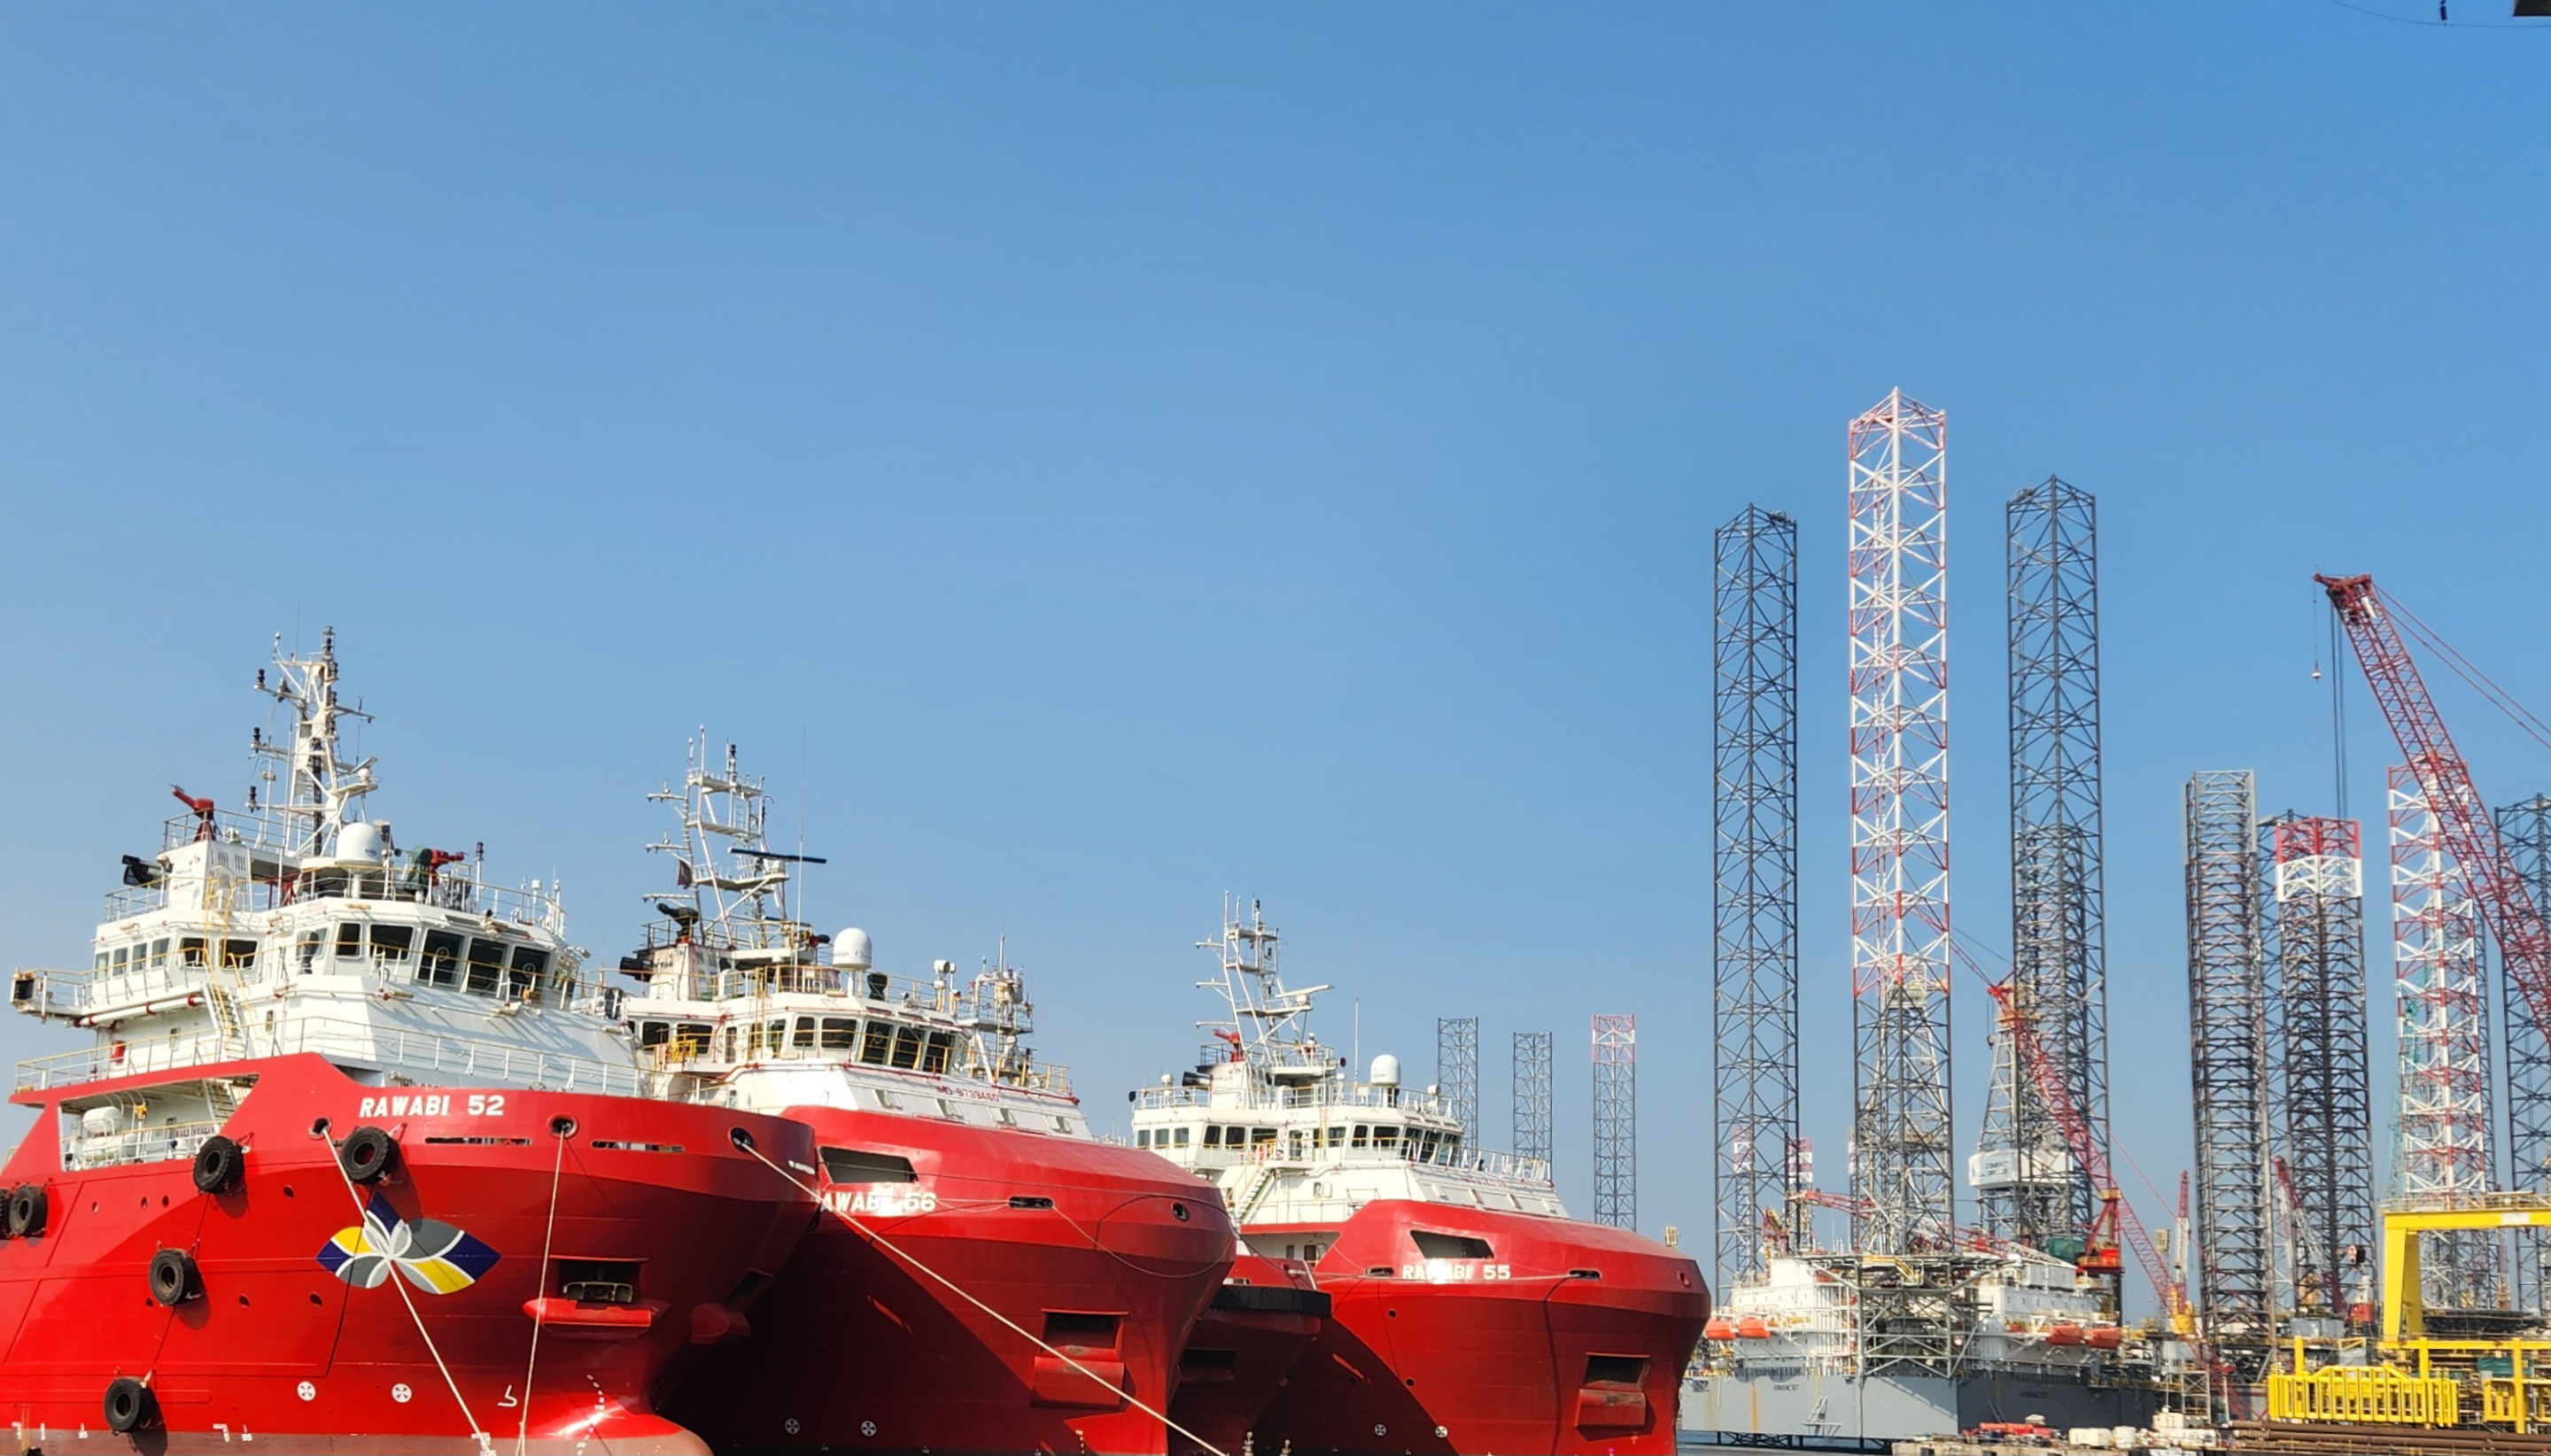 Rawabi Vallianz Offshore Services' vessels